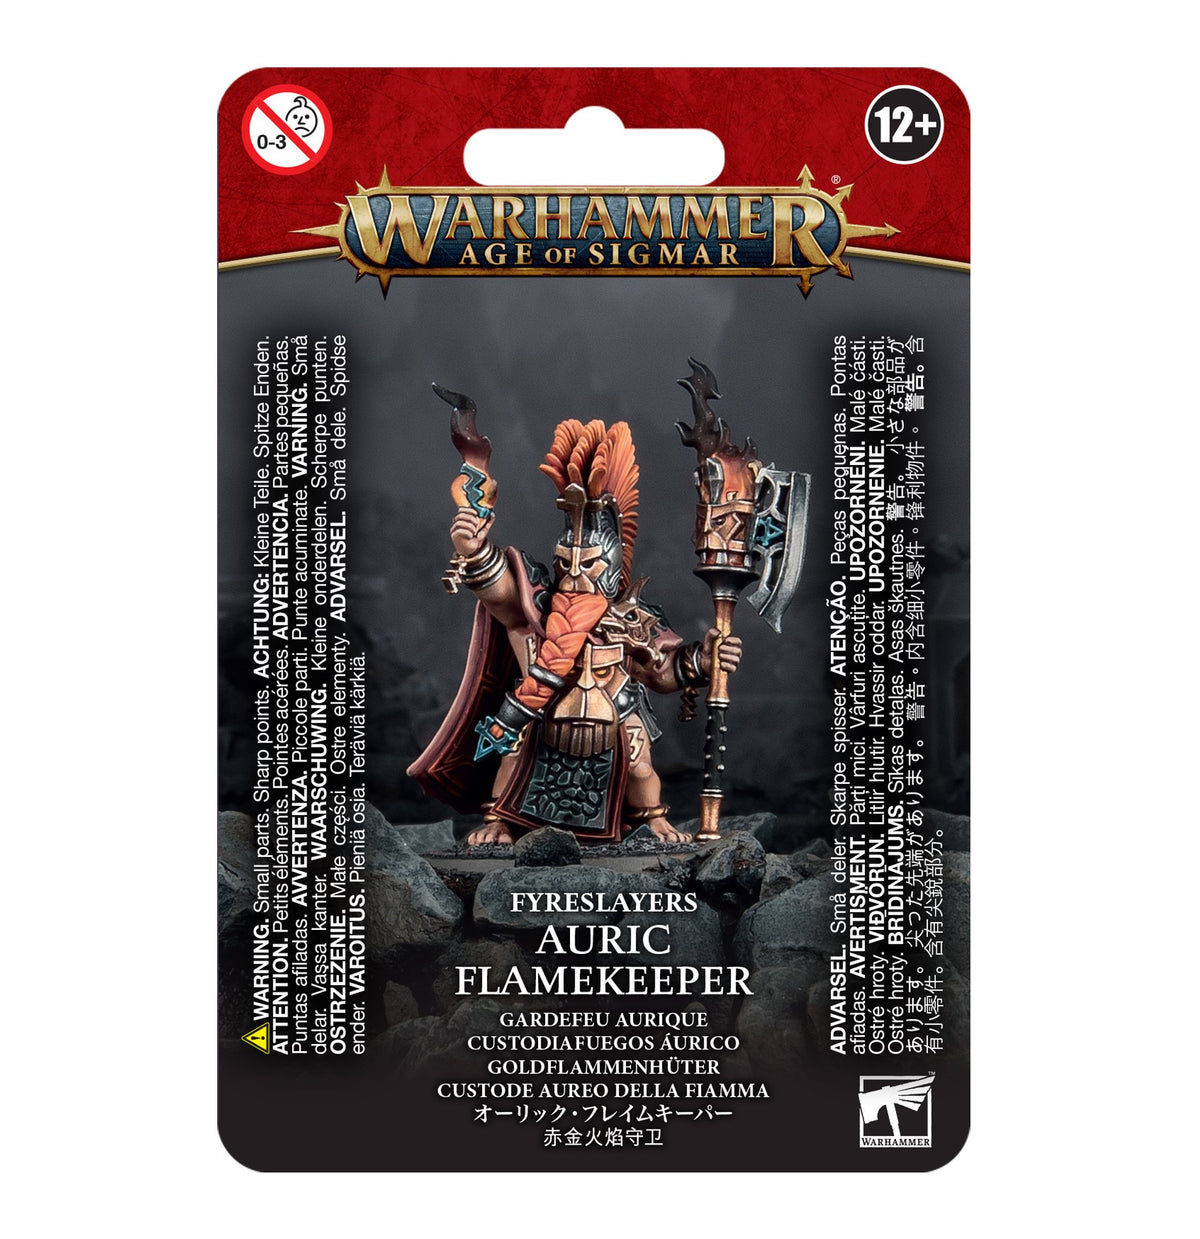 Fyreslayers - Auric Flamekeeper (Warhammer Age of Sigmar)